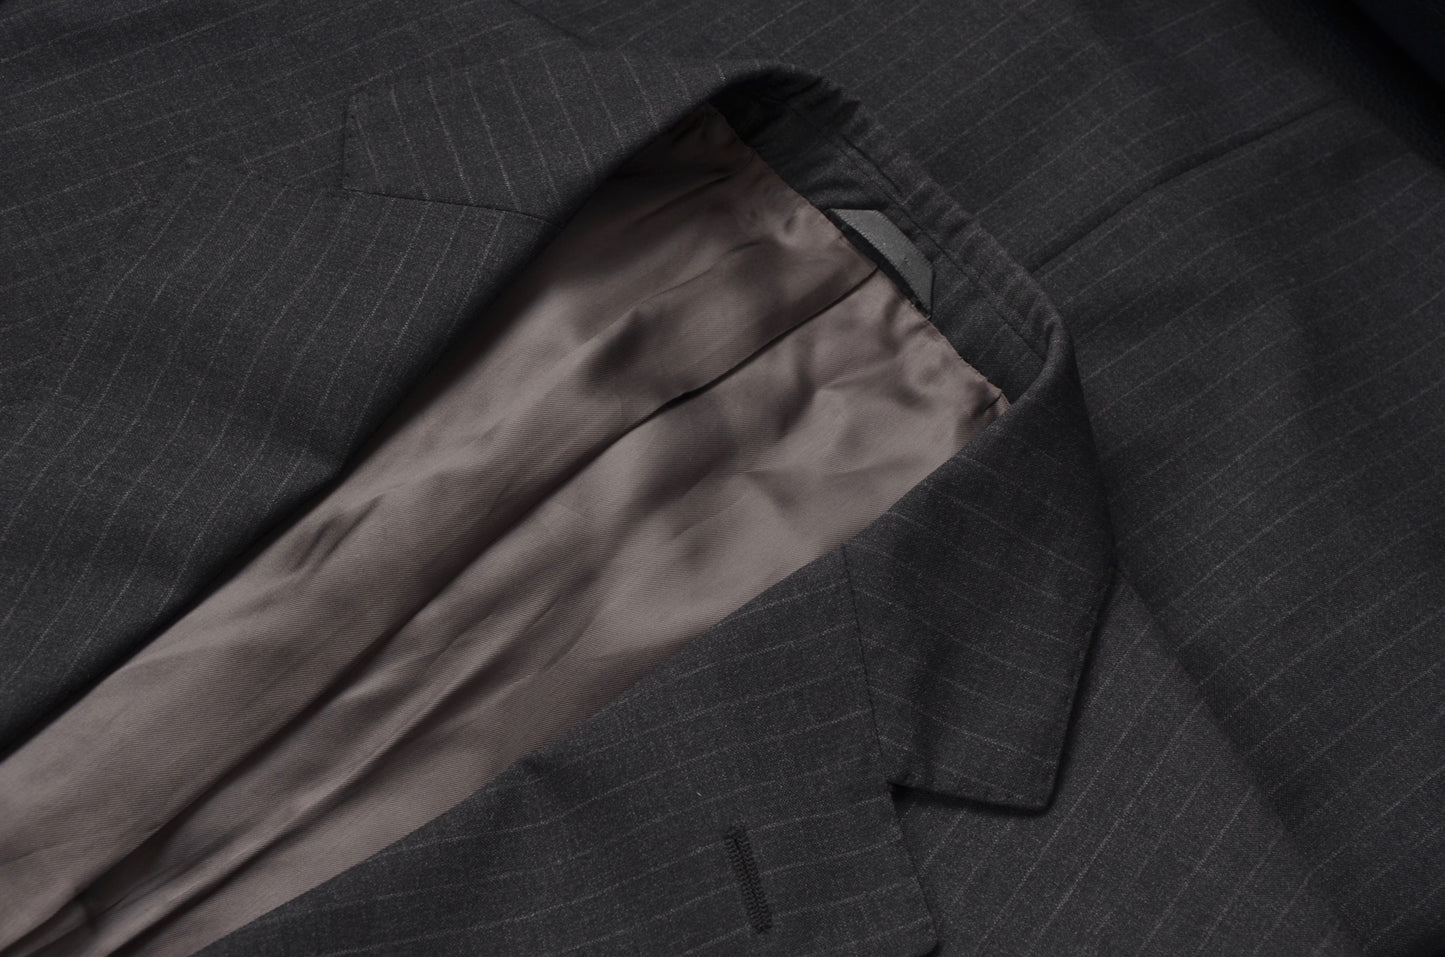 Dantendorfer Chalk Stripe Anzug Größe 46 - Grau